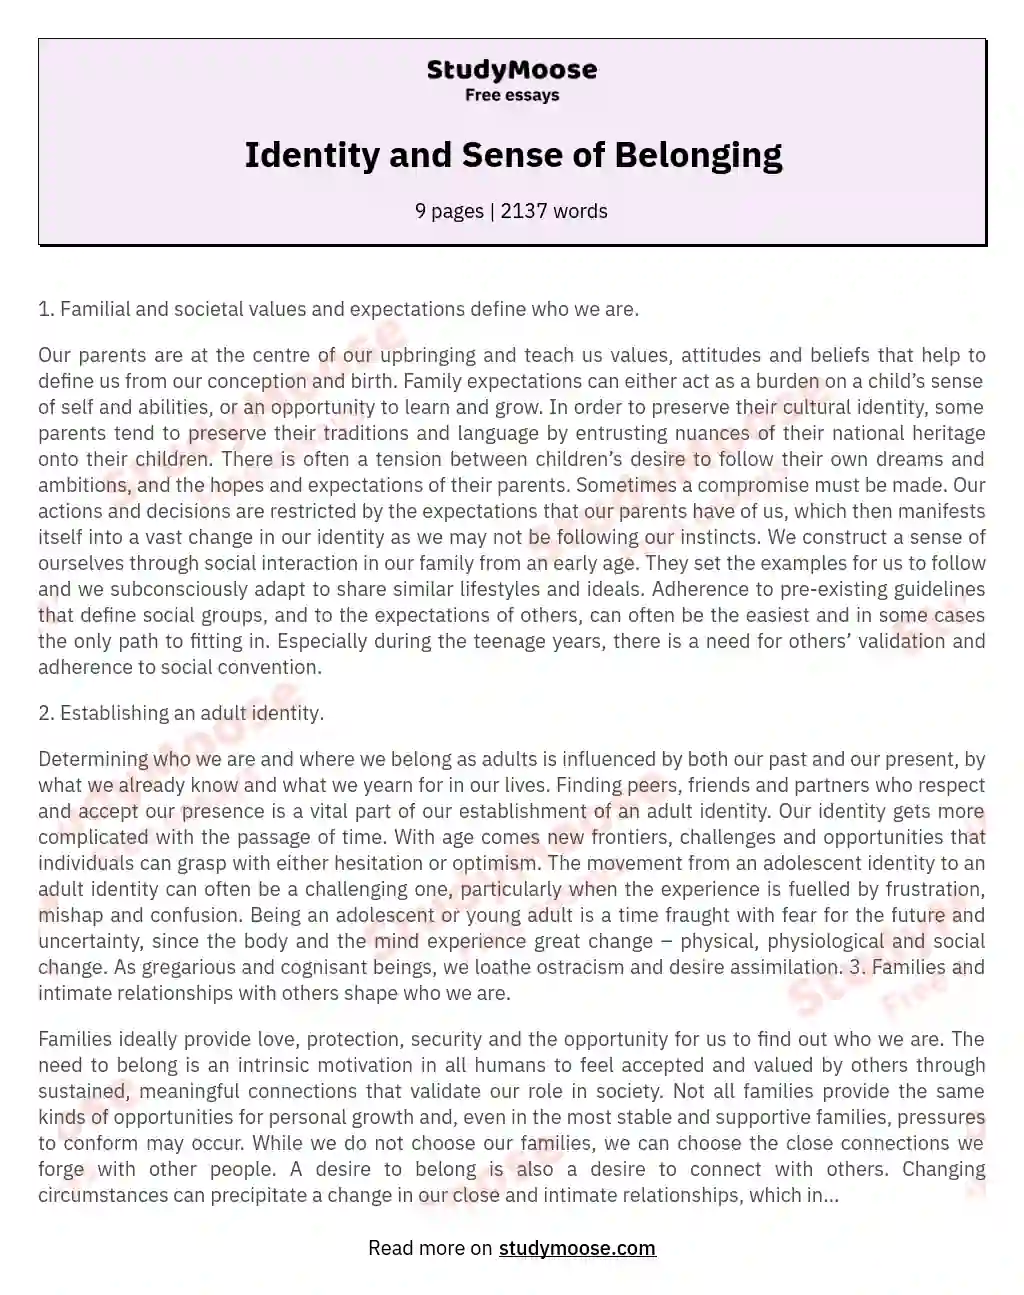 Identity and Sense of Belonging essay